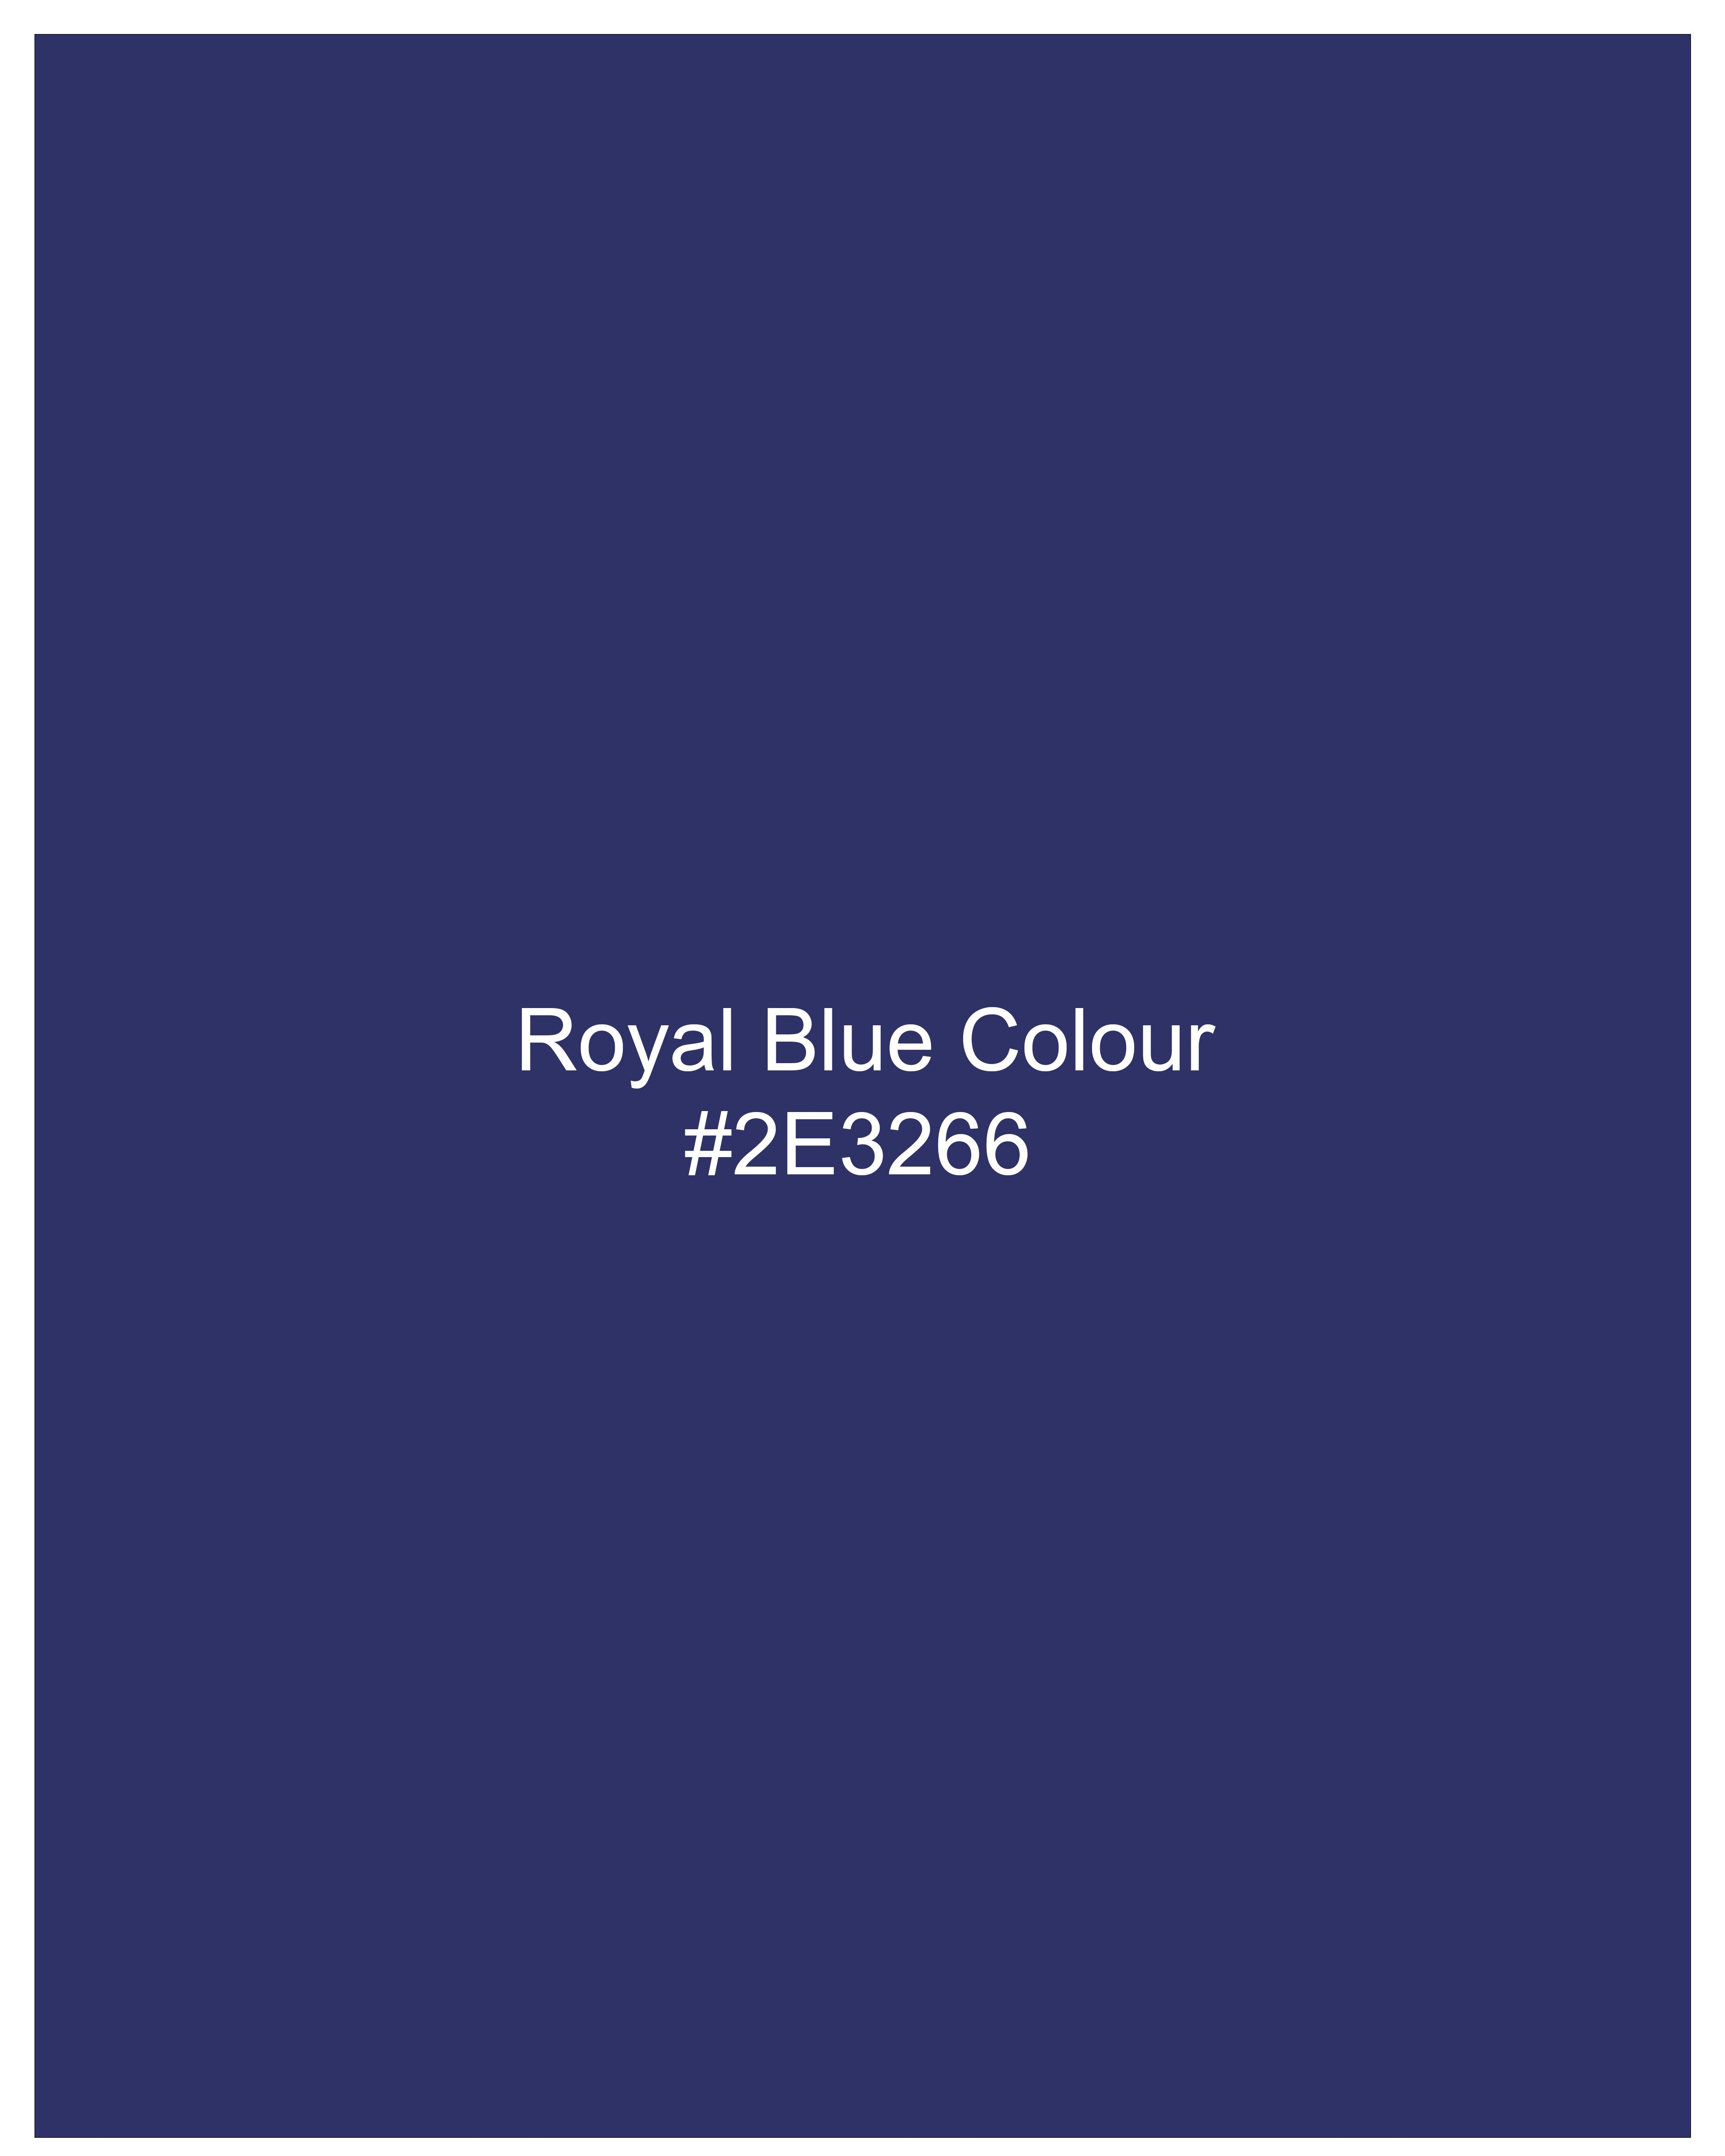 Royal Blue Cross Buttoned Bandhgala Suit ST2454-CBG-36, ST2454-CBG-38, ST2454-CBG-40, ST2454-CBG-42, ST2454-CBG-44, ST2454-CBG-46, ST2454-CBG-48, ST2454-CBG-50, ST2454-CBG-52, ST2454-CBG-54, ST2454-CBG-56, ST2454-CBG-58, ST2454-CBG-60